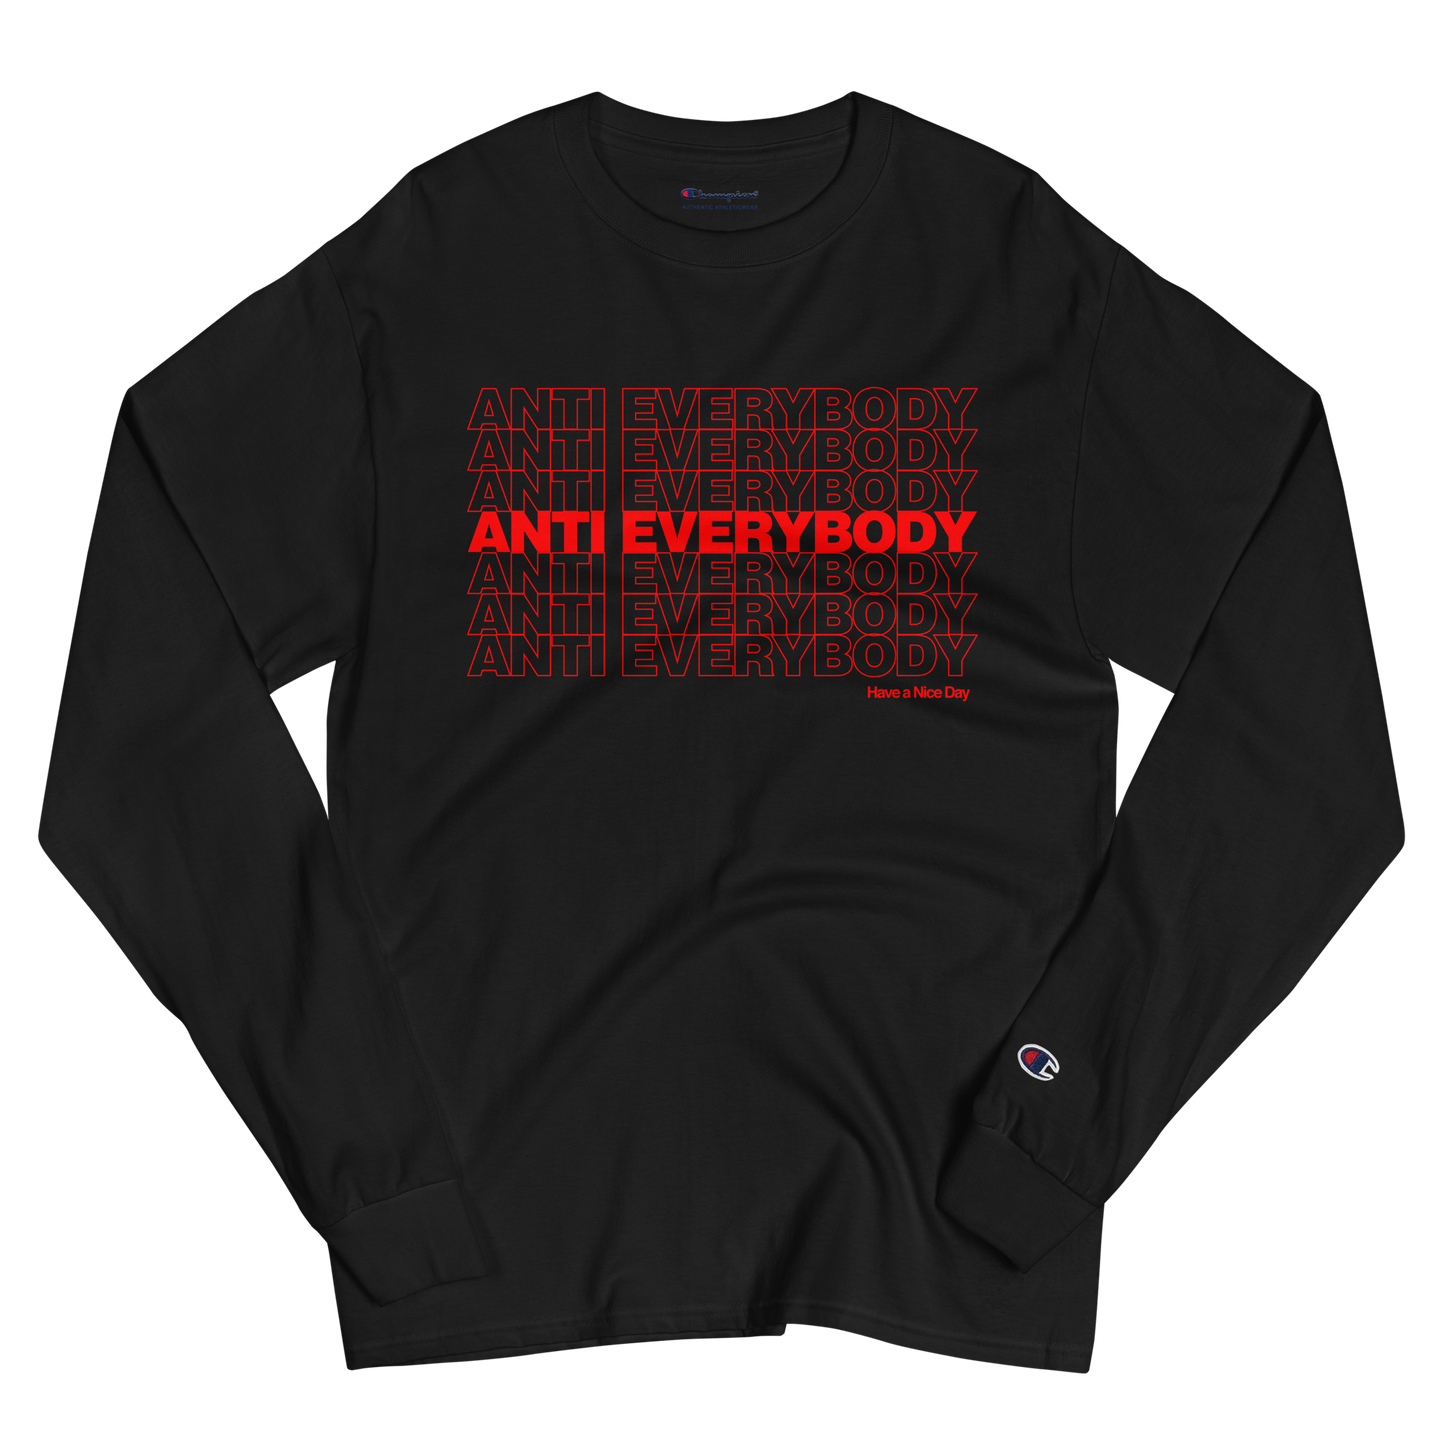 Anti-Everybody Nova VI x Champion Long Sleeve Shirt